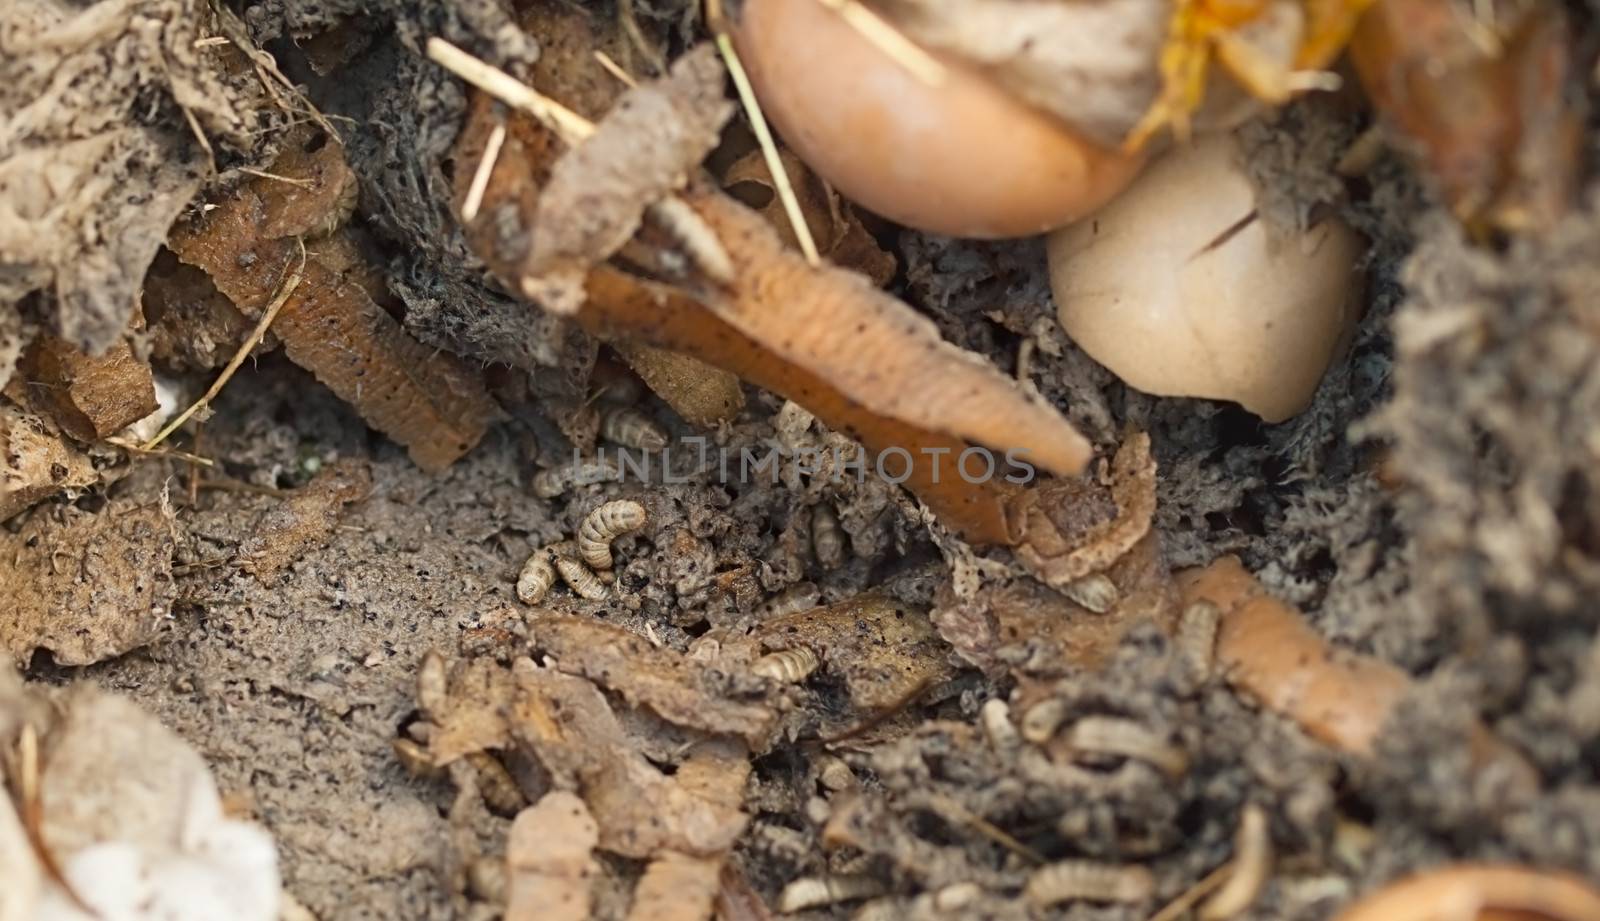 maggot grubs decomposing scraps in compost by sherj